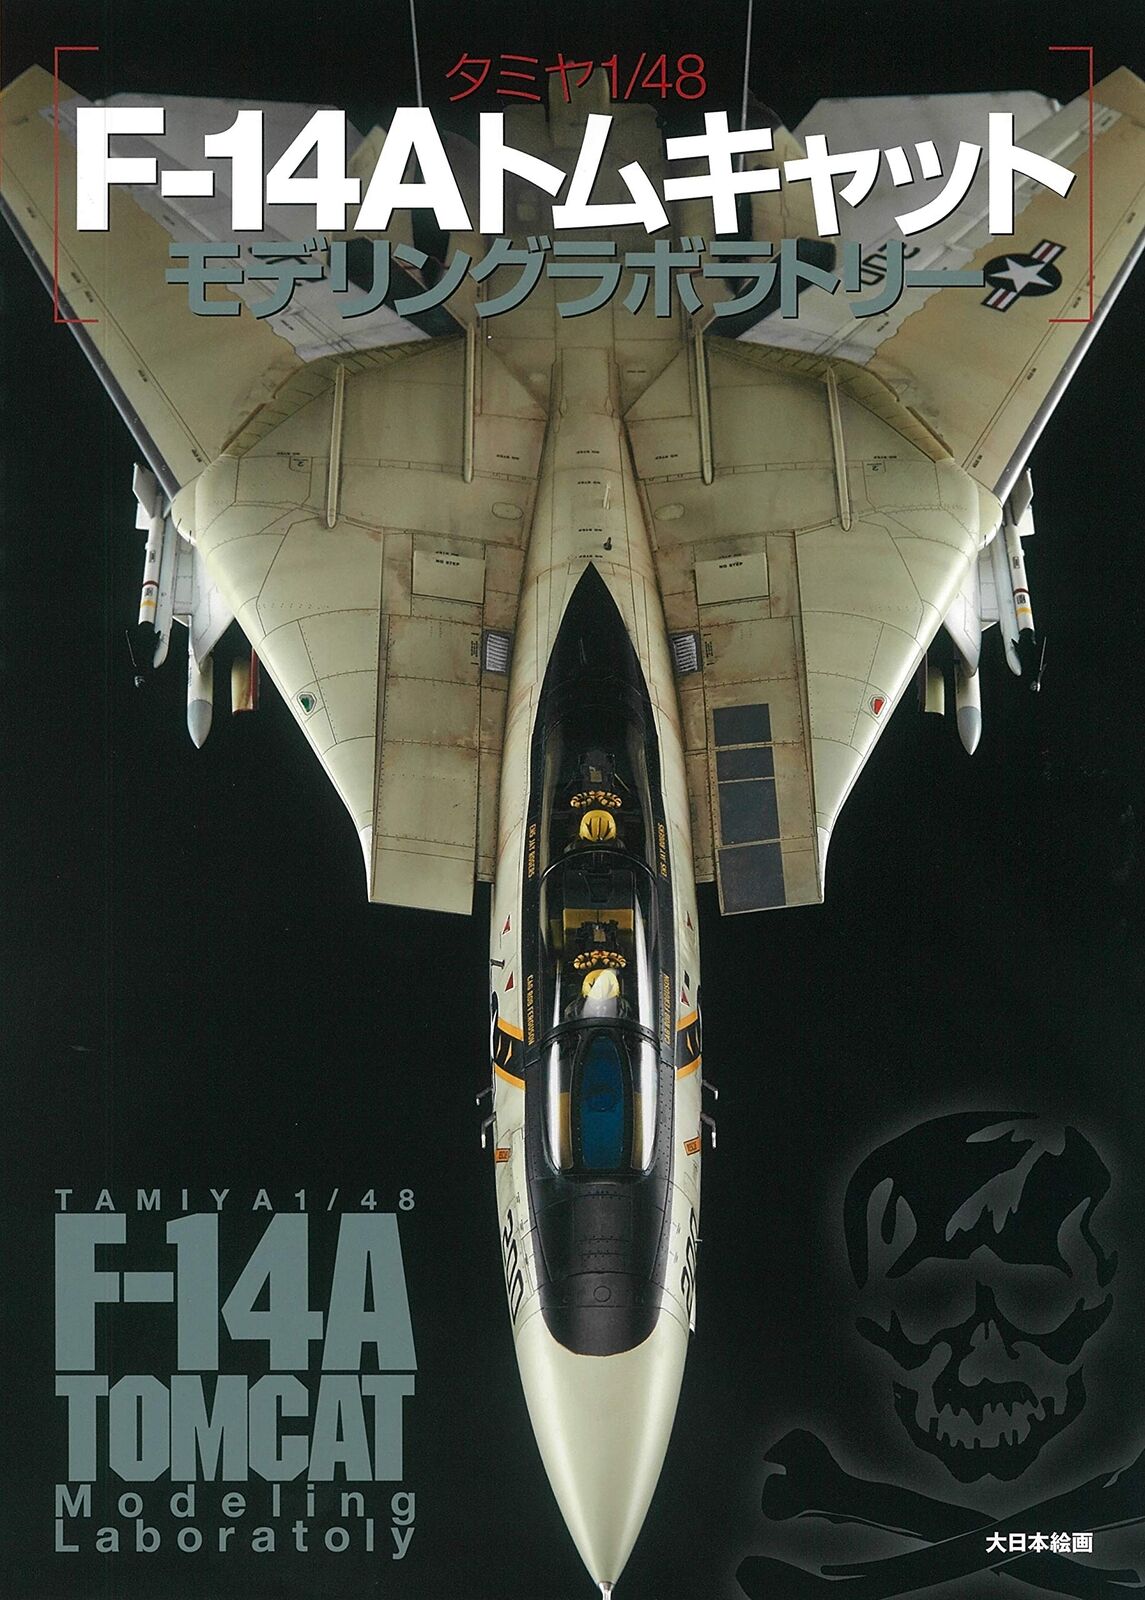 Tamiya 1/48 F-14A Tomcat Modeling Laboratory